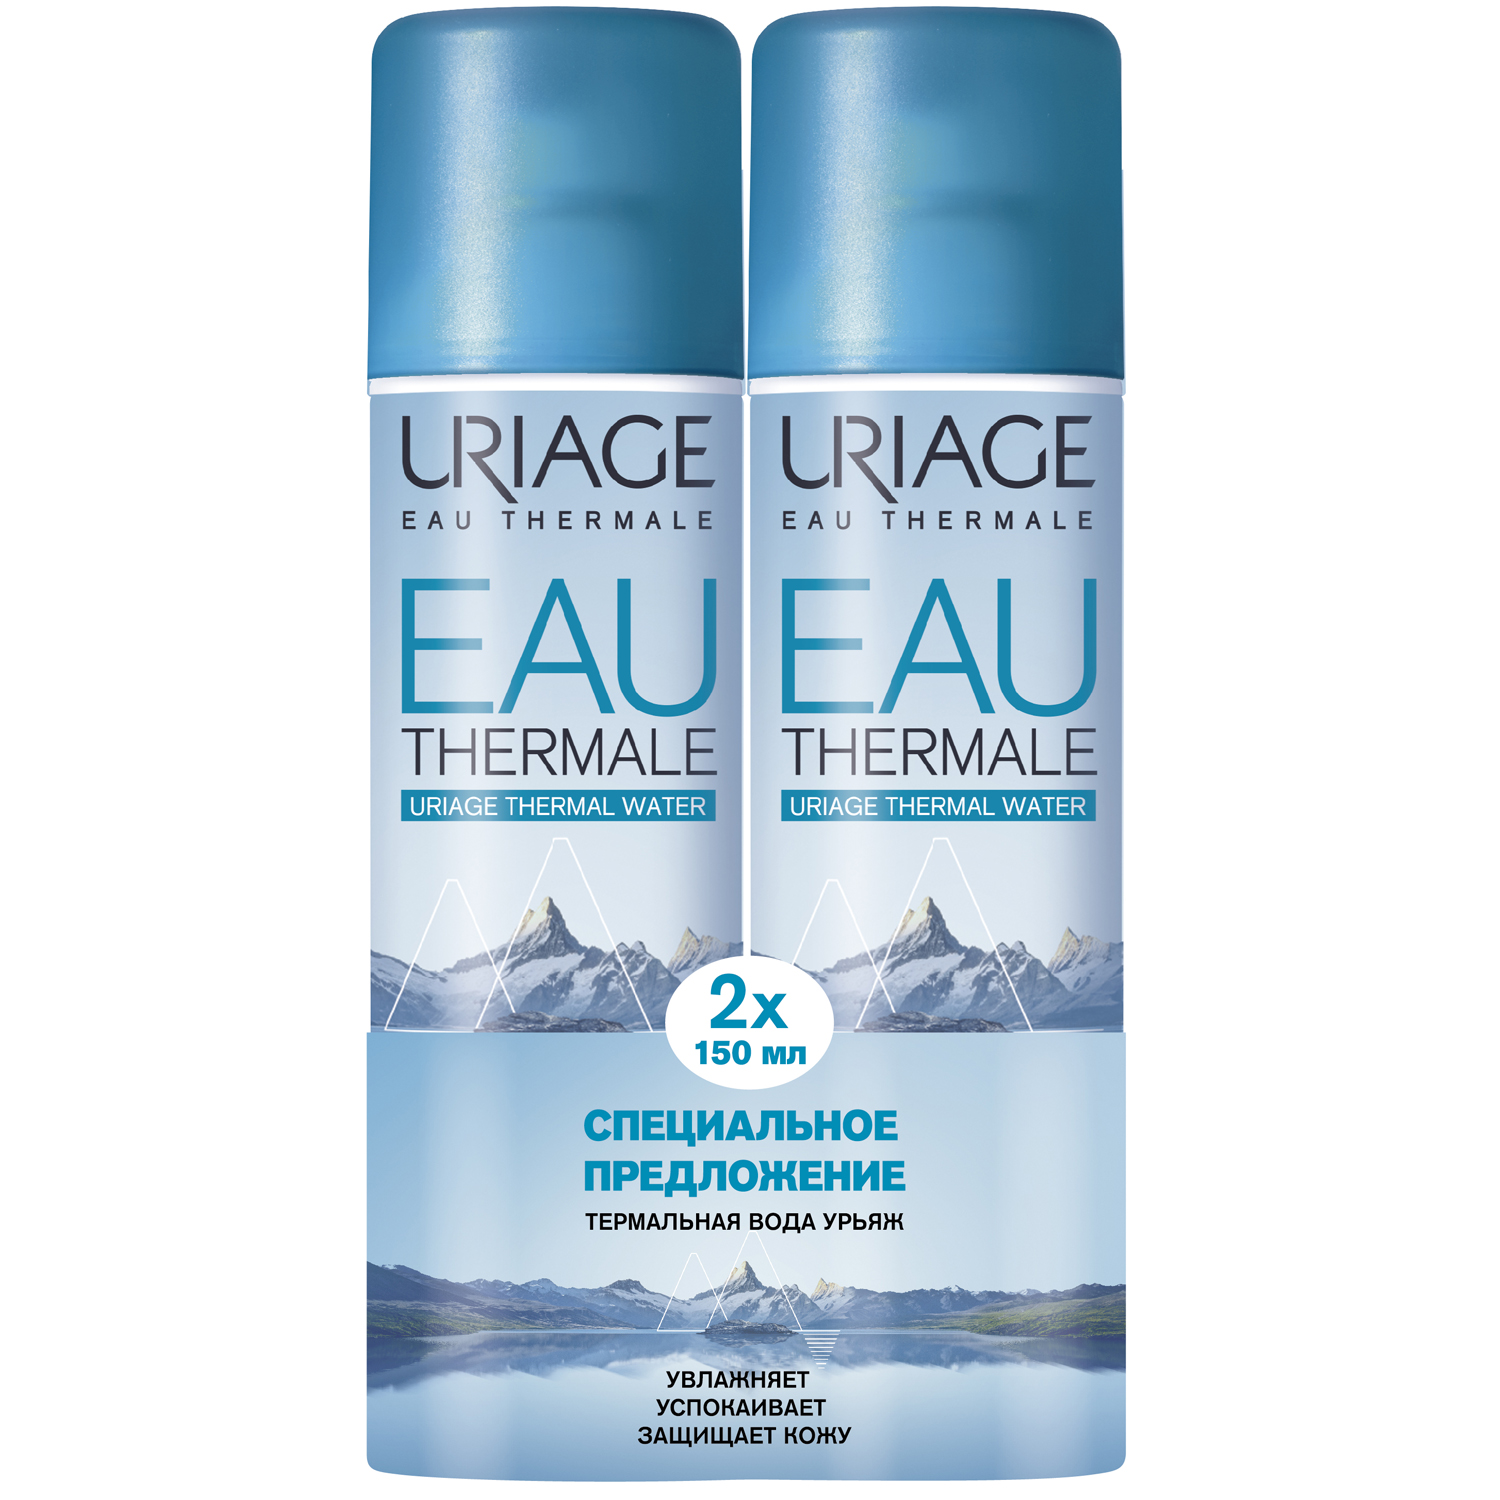 Uriage Термальная вода Урьяж, 2 х 150 мл (Uriage, Eau thermale) uriage термальная вода урьяж 300 мл uriage eau thermale